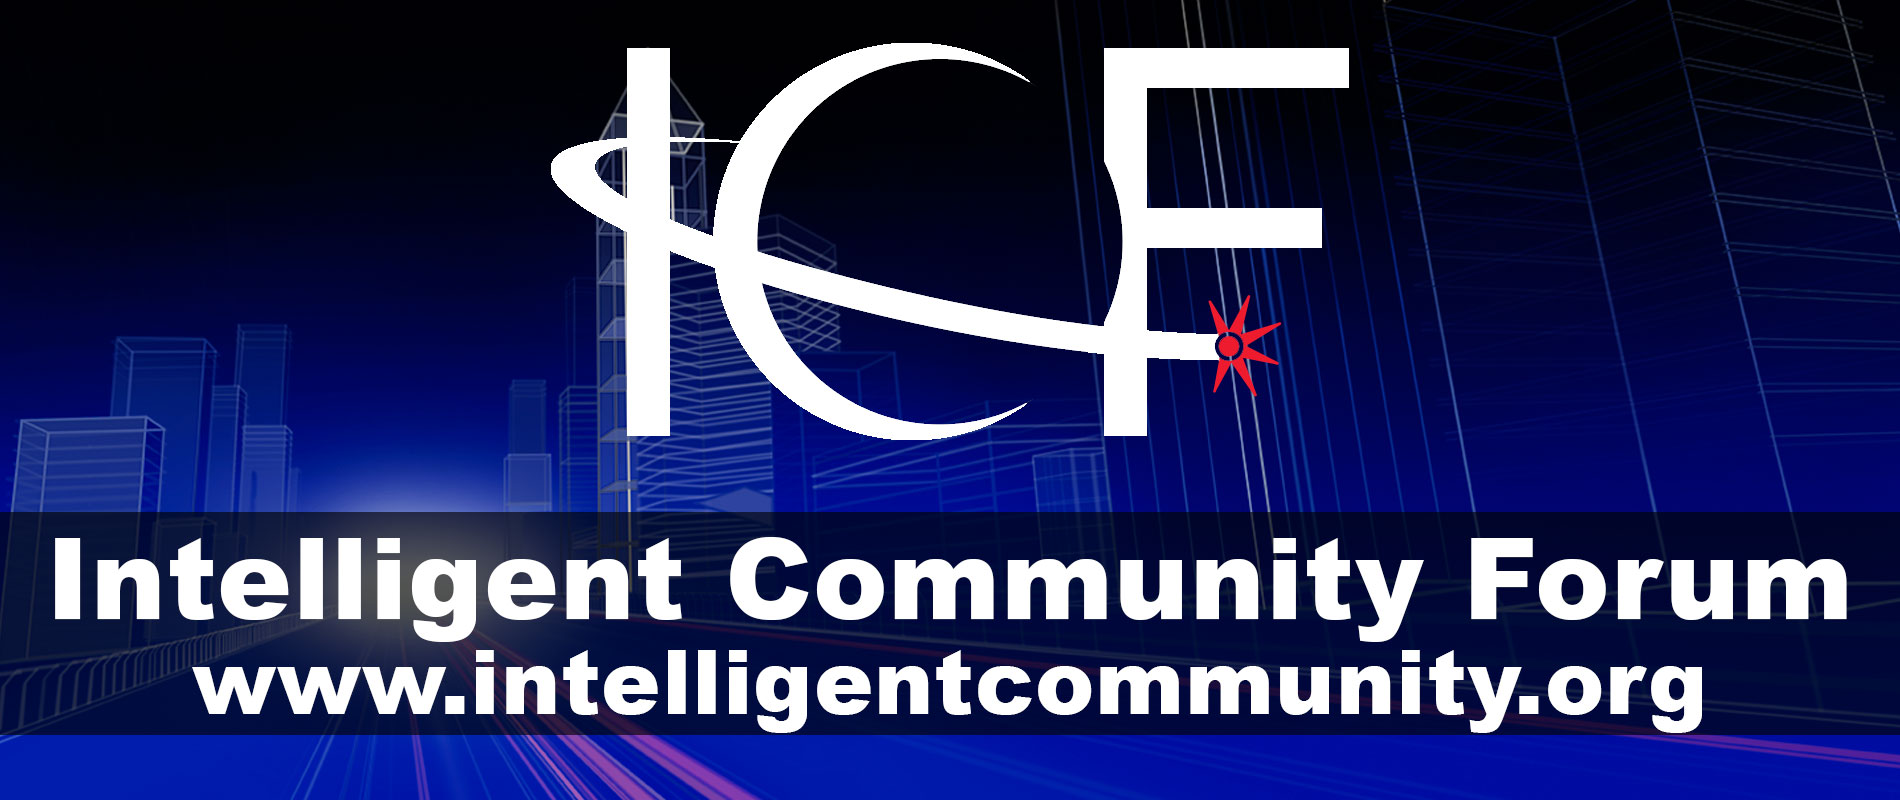 ICF-Banner-Image-1.jpg